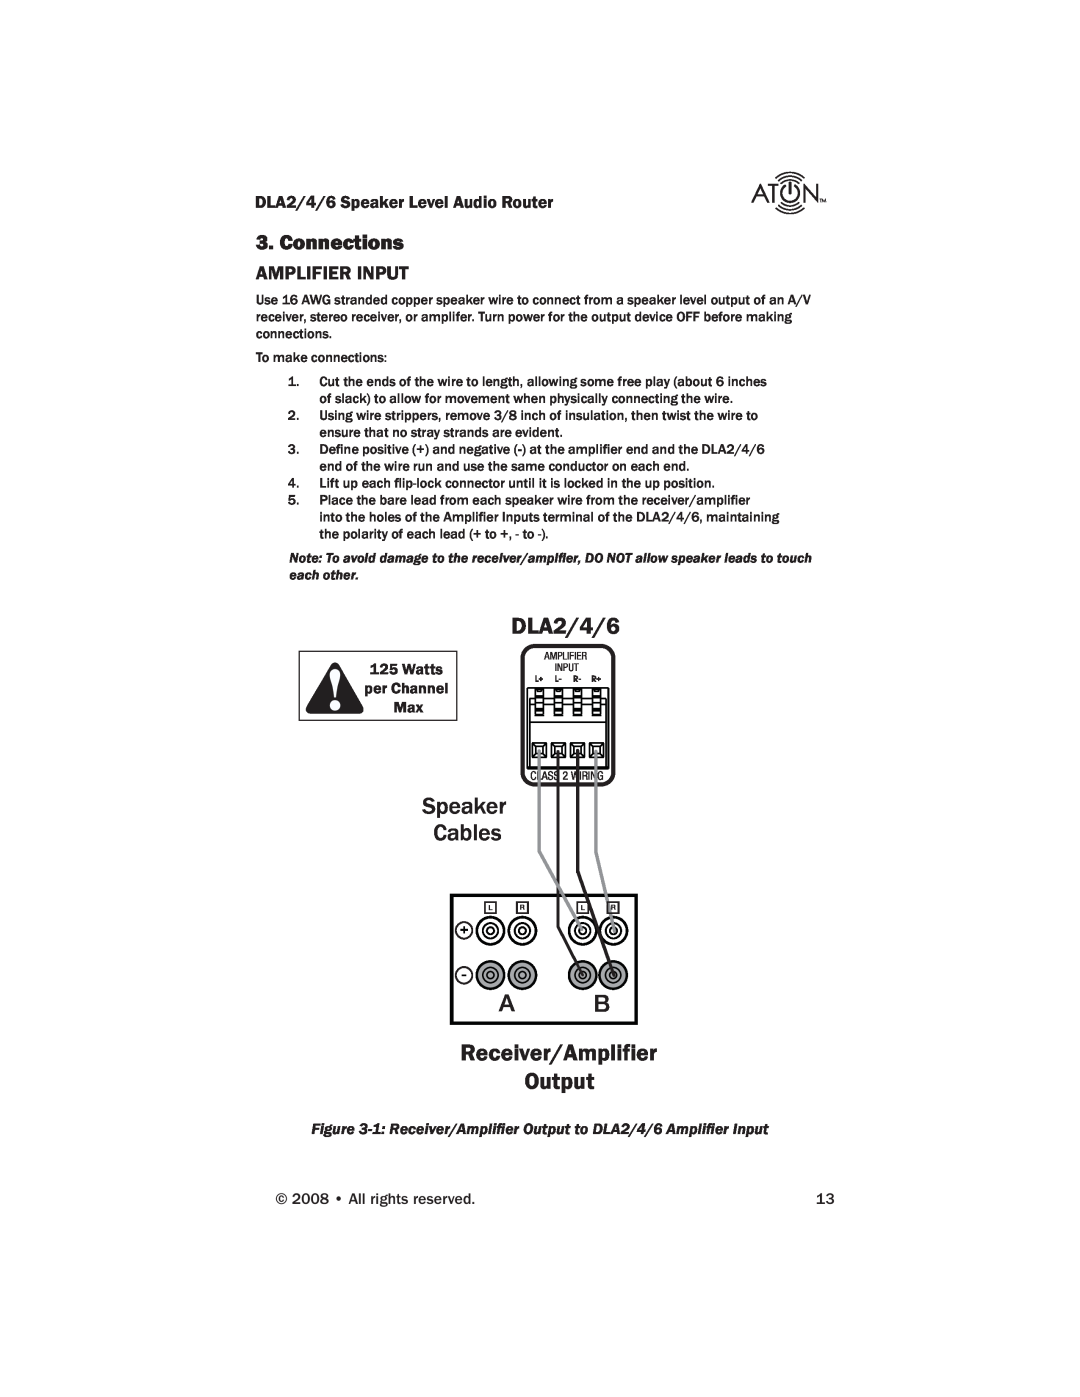 ATON DLA4, DLA6 manual Connections, DLA2/4/6, Speaker Cables, Receiver/Amplifier Output, Amplifier Input 